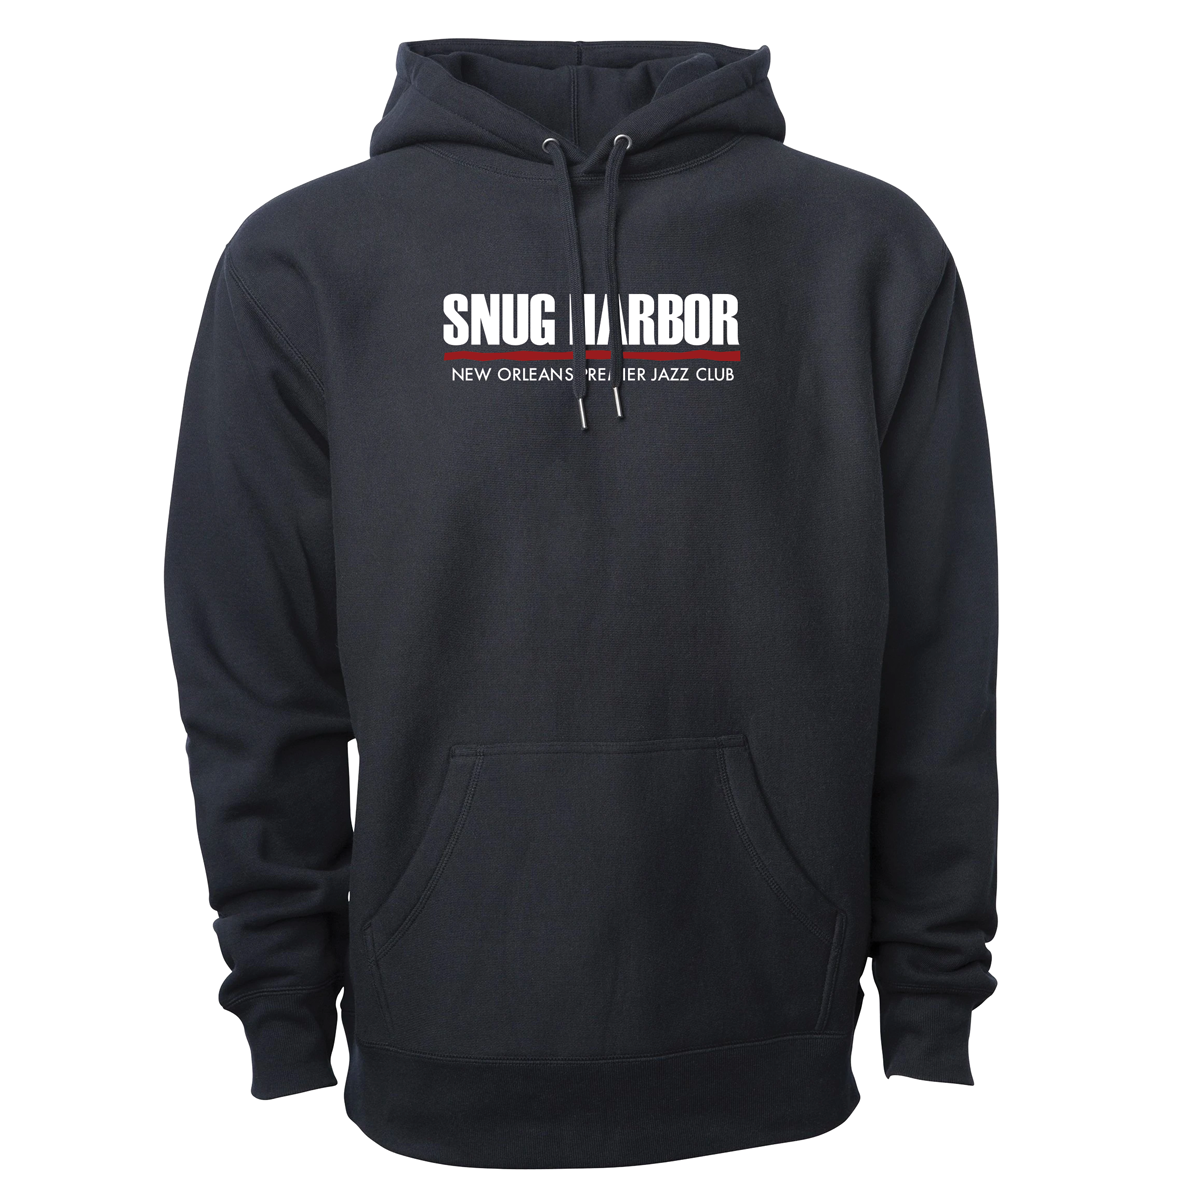 Snug Harbor Jazz Bistro pullover hoodie. New Orlean's premier jazz club